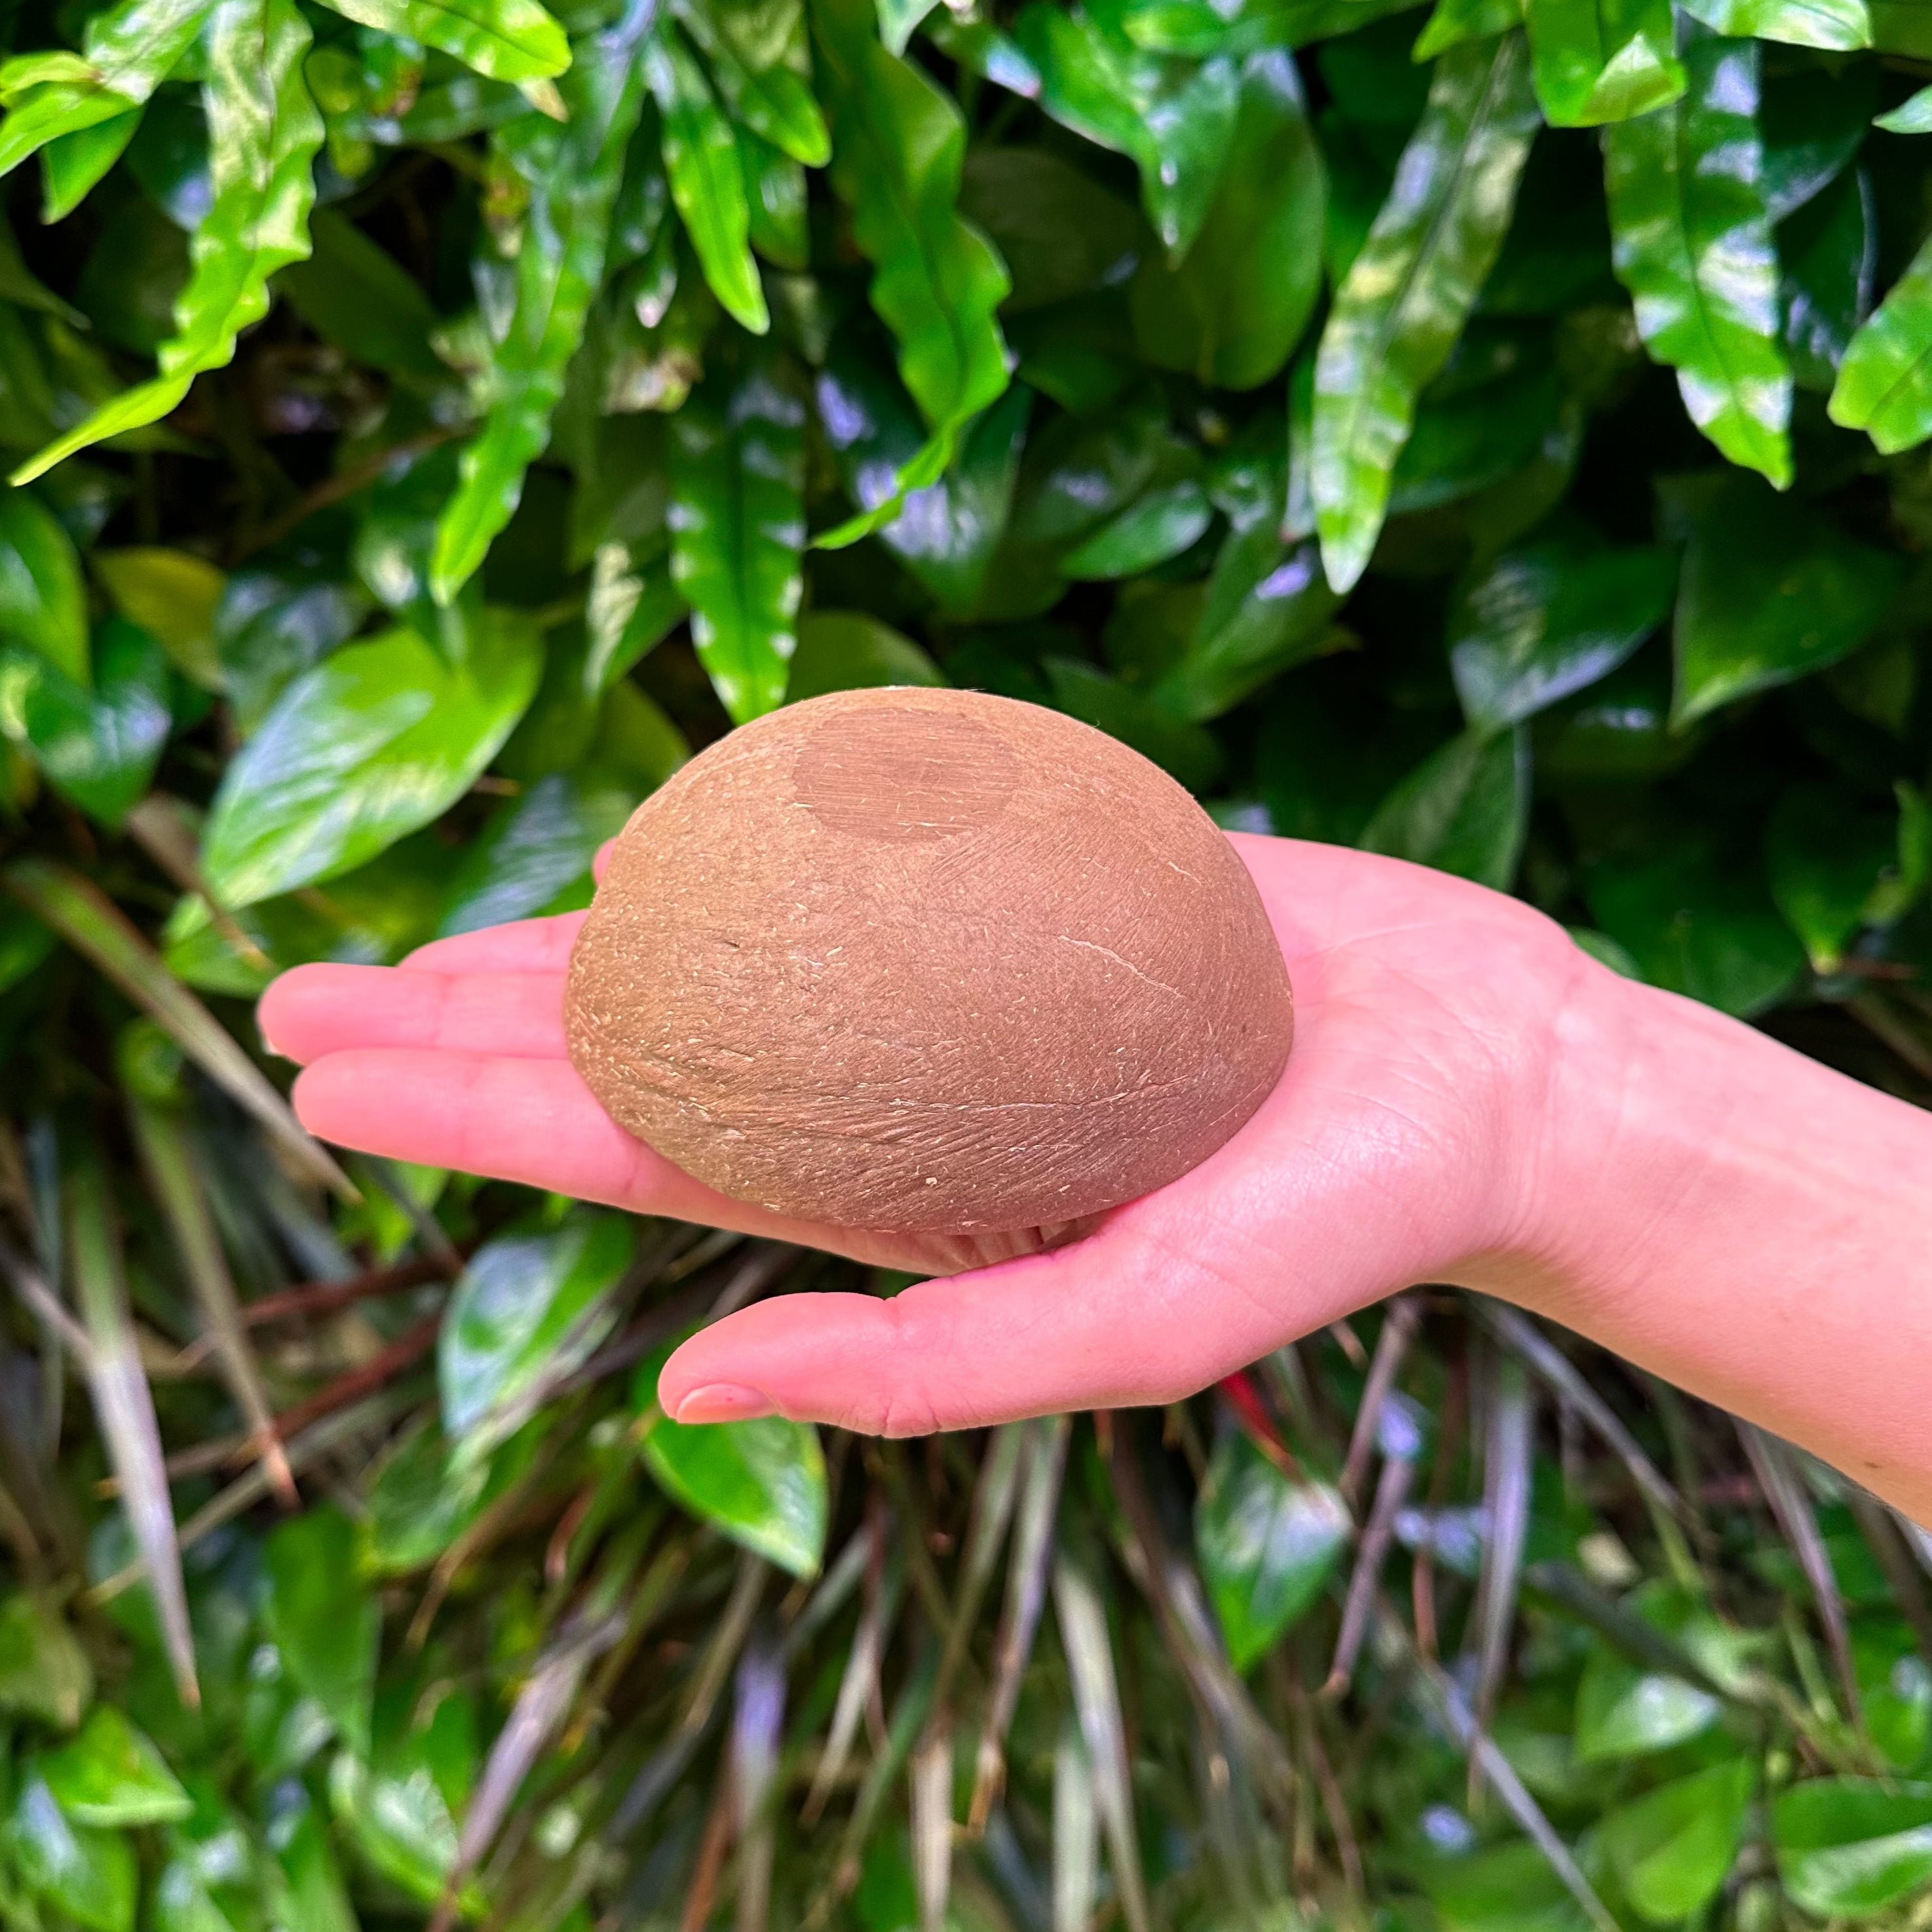 Wholesale Coconut Shell Half